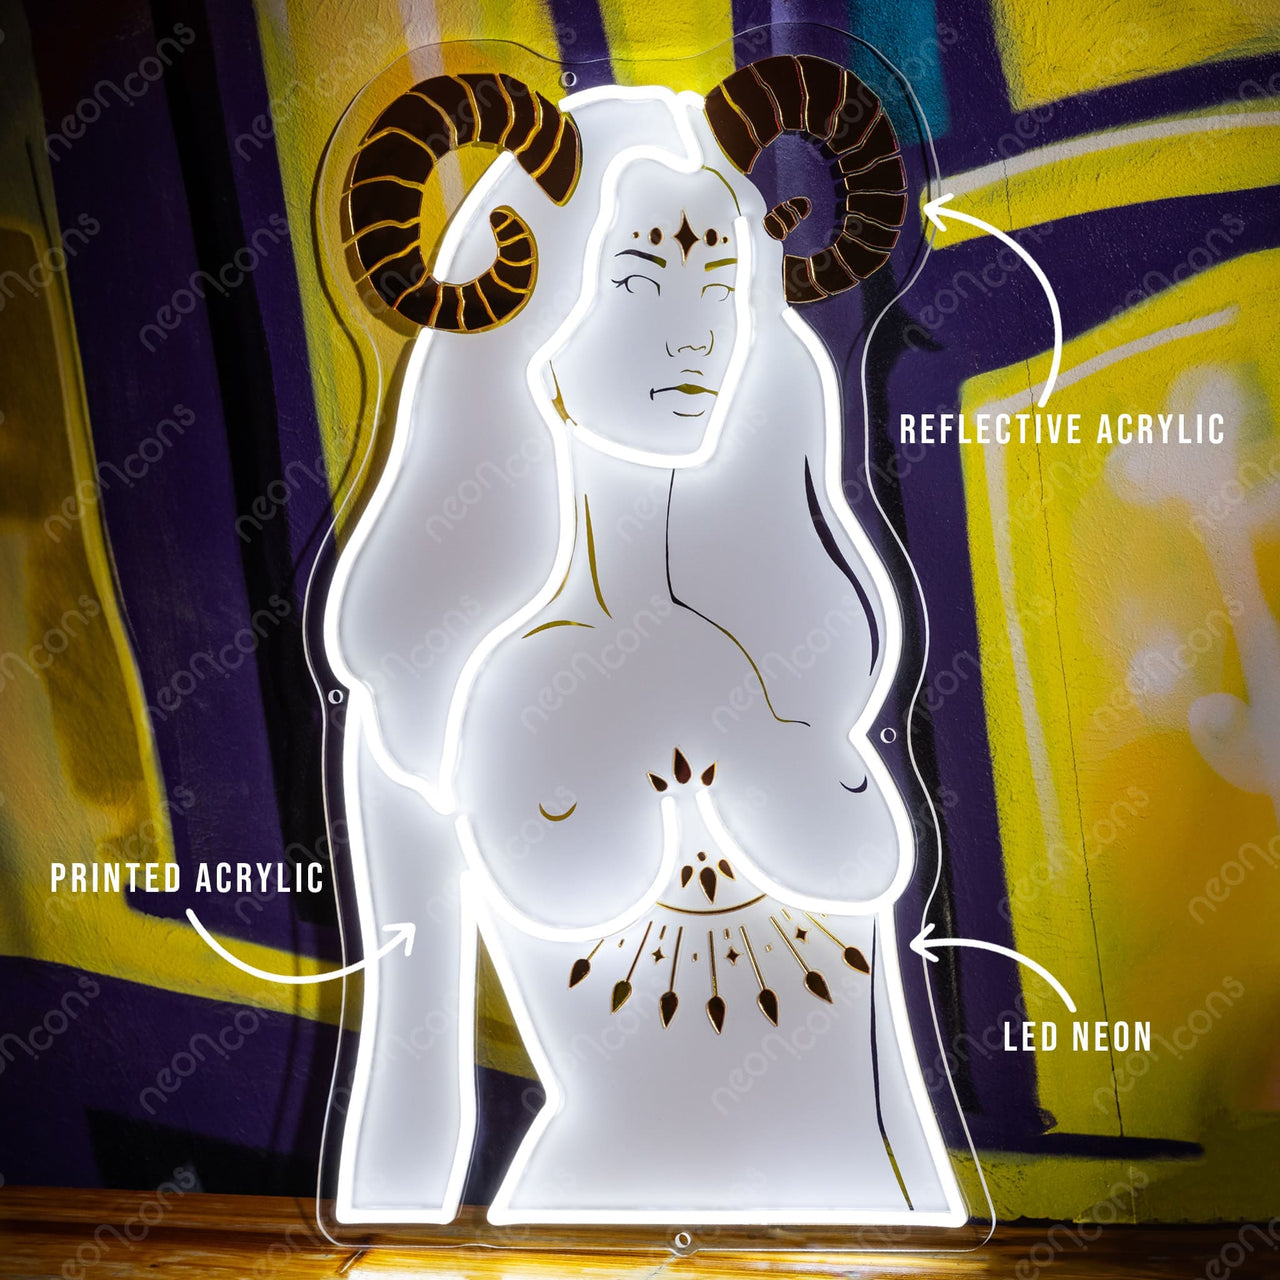 "Libra Goddess" LED Neon x Print x Reflective Acrylic by Neon Icons